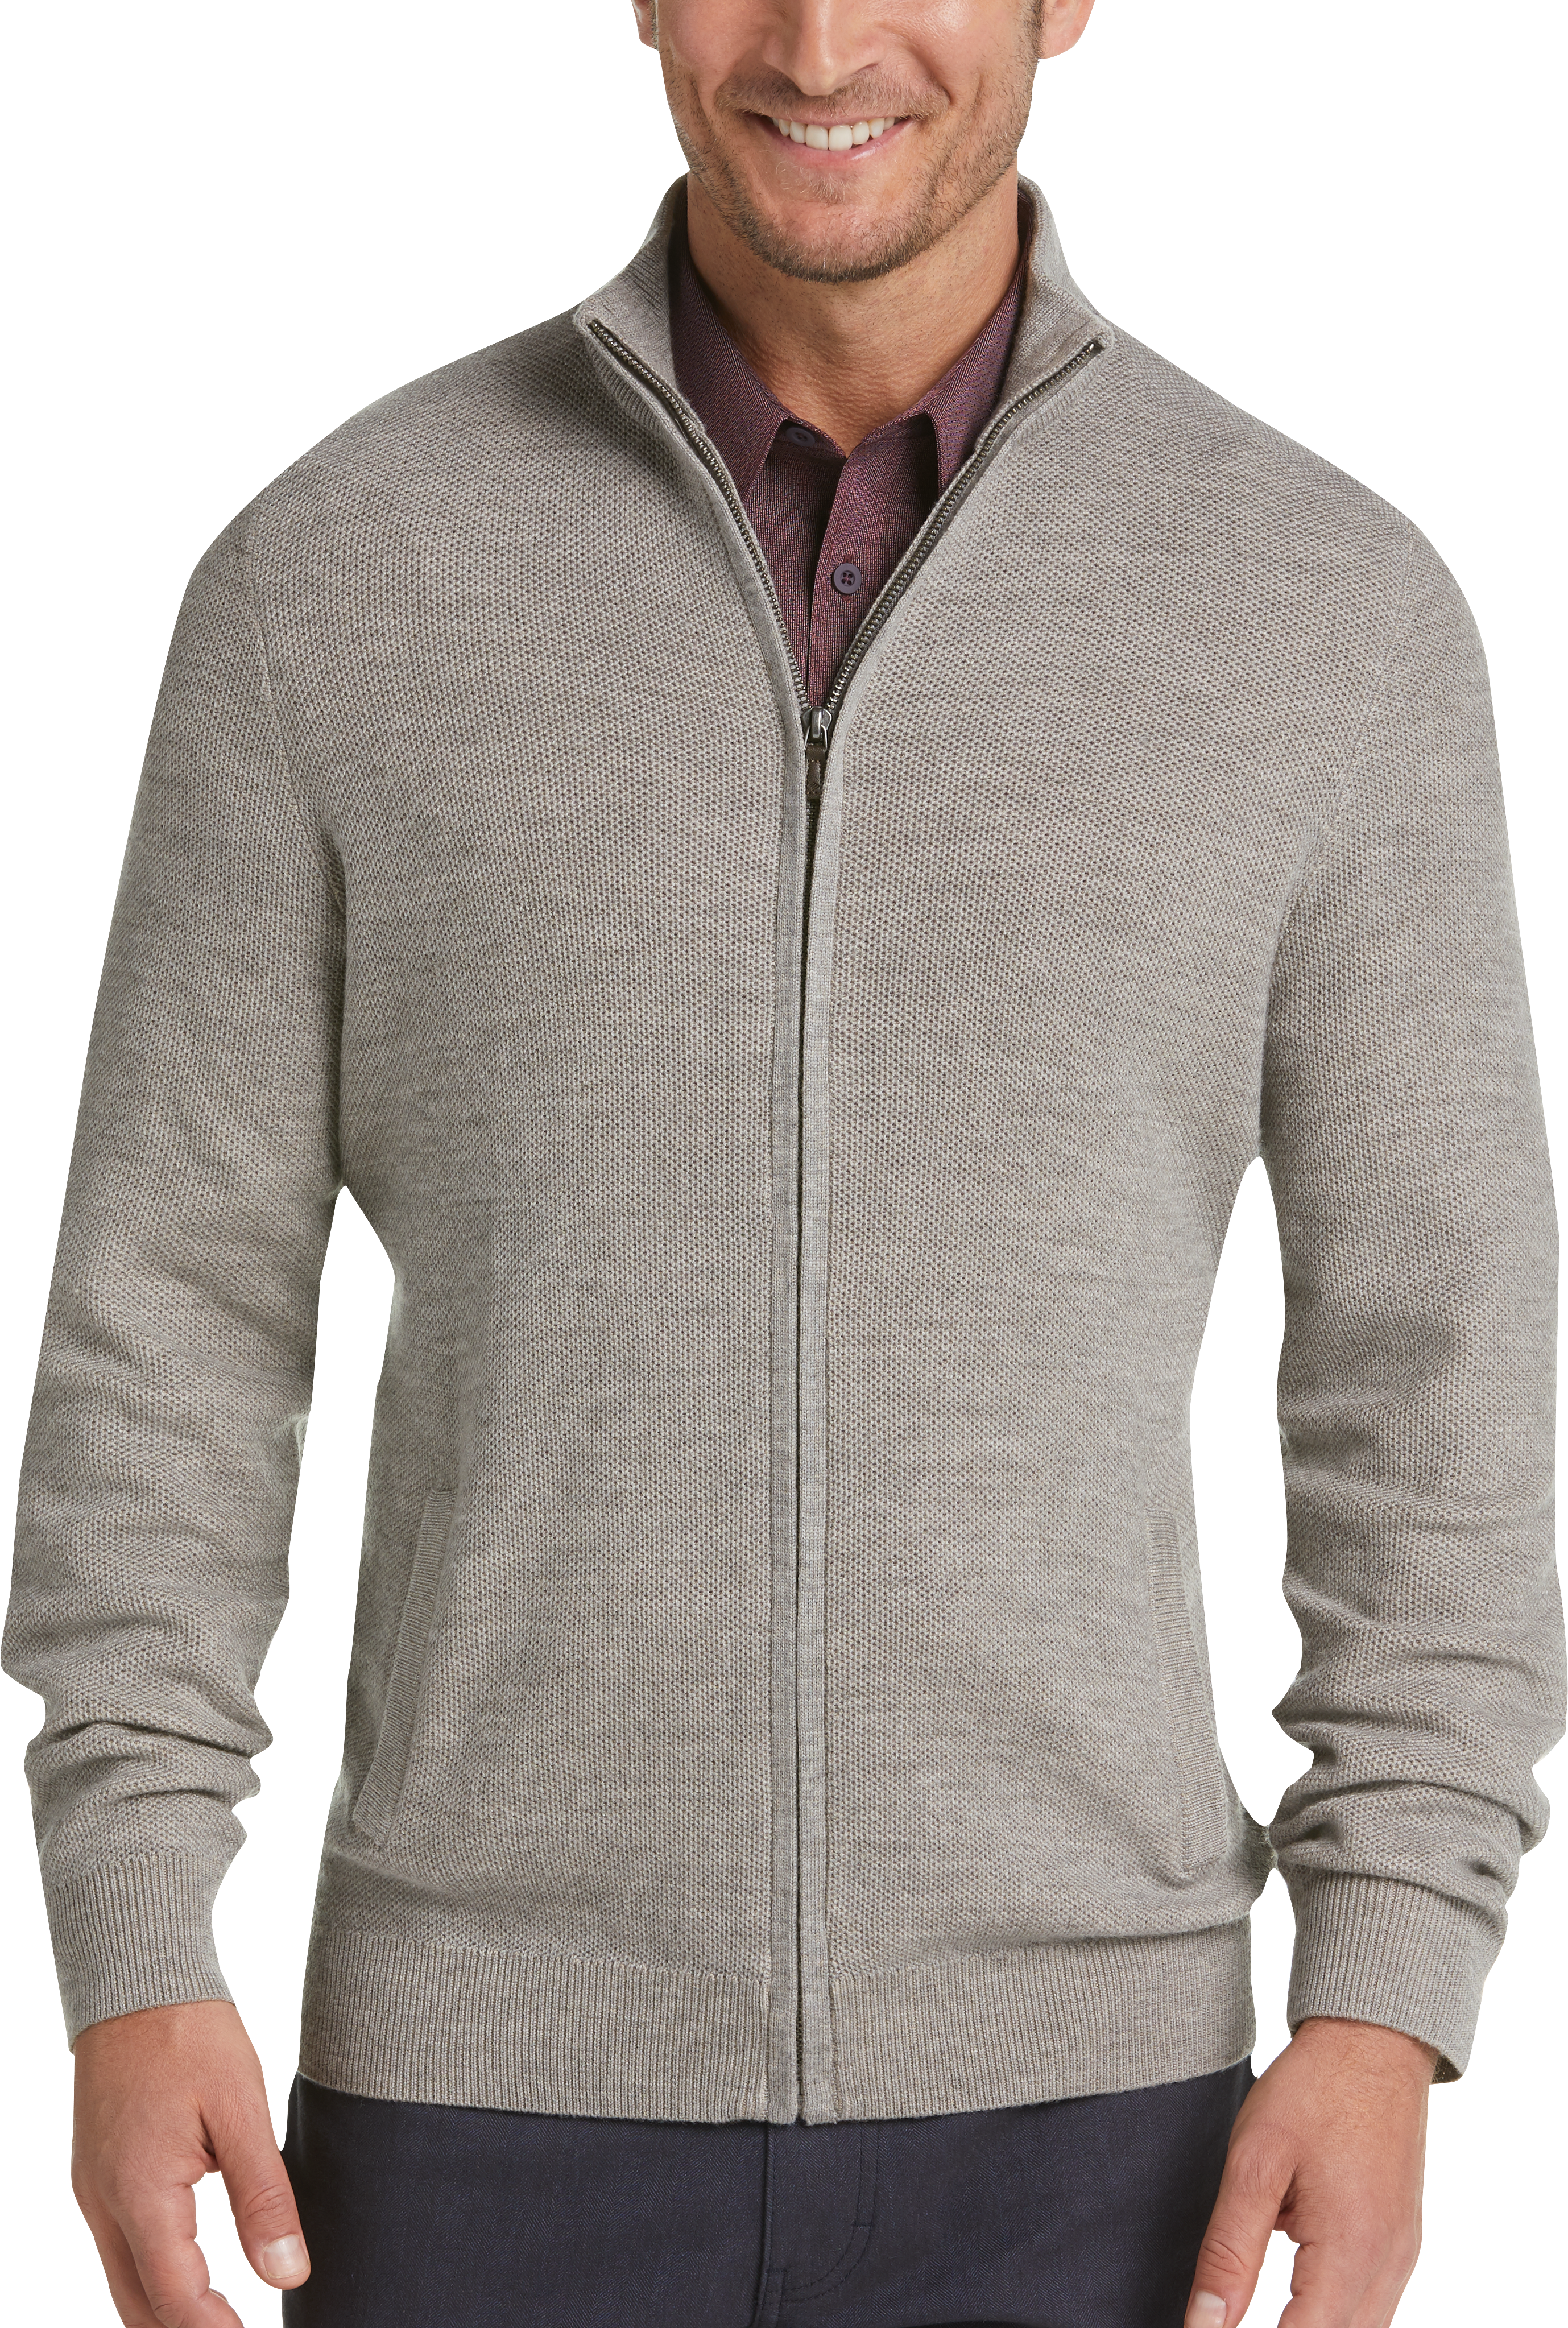 Joseph Abboud Men's Full-Zip Sweater only $14.99 | eDealinfo.com